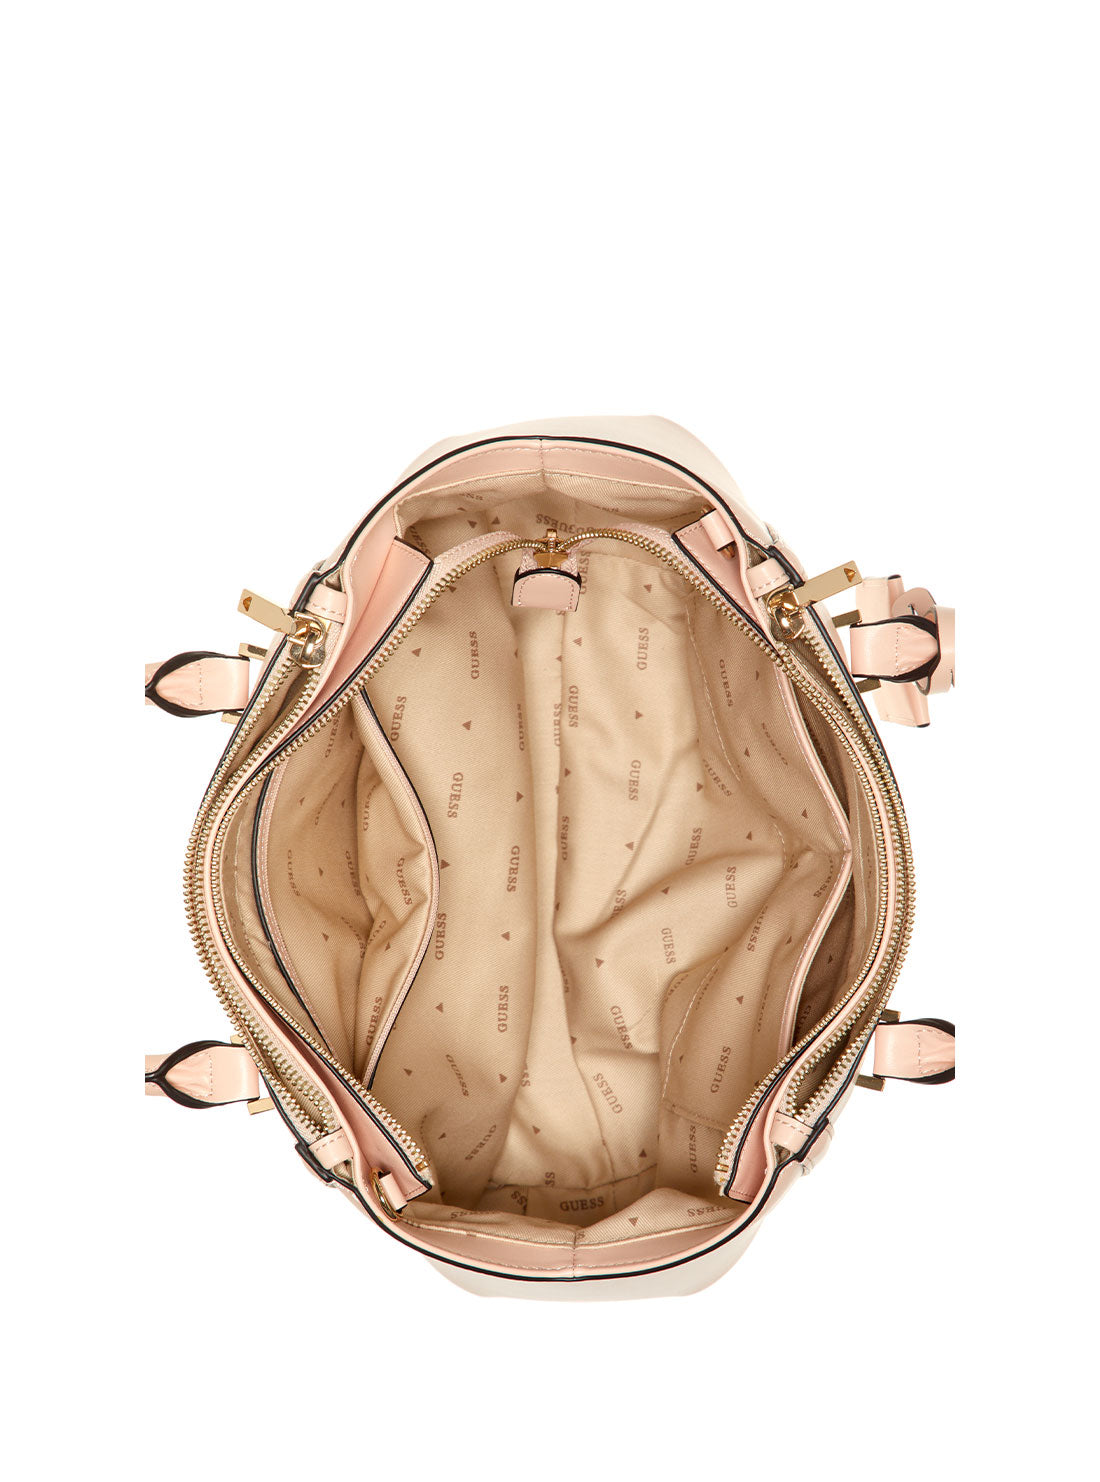 Pale Pink Leie Status Satchel Bag | GUESS Women's Handbags | inside view